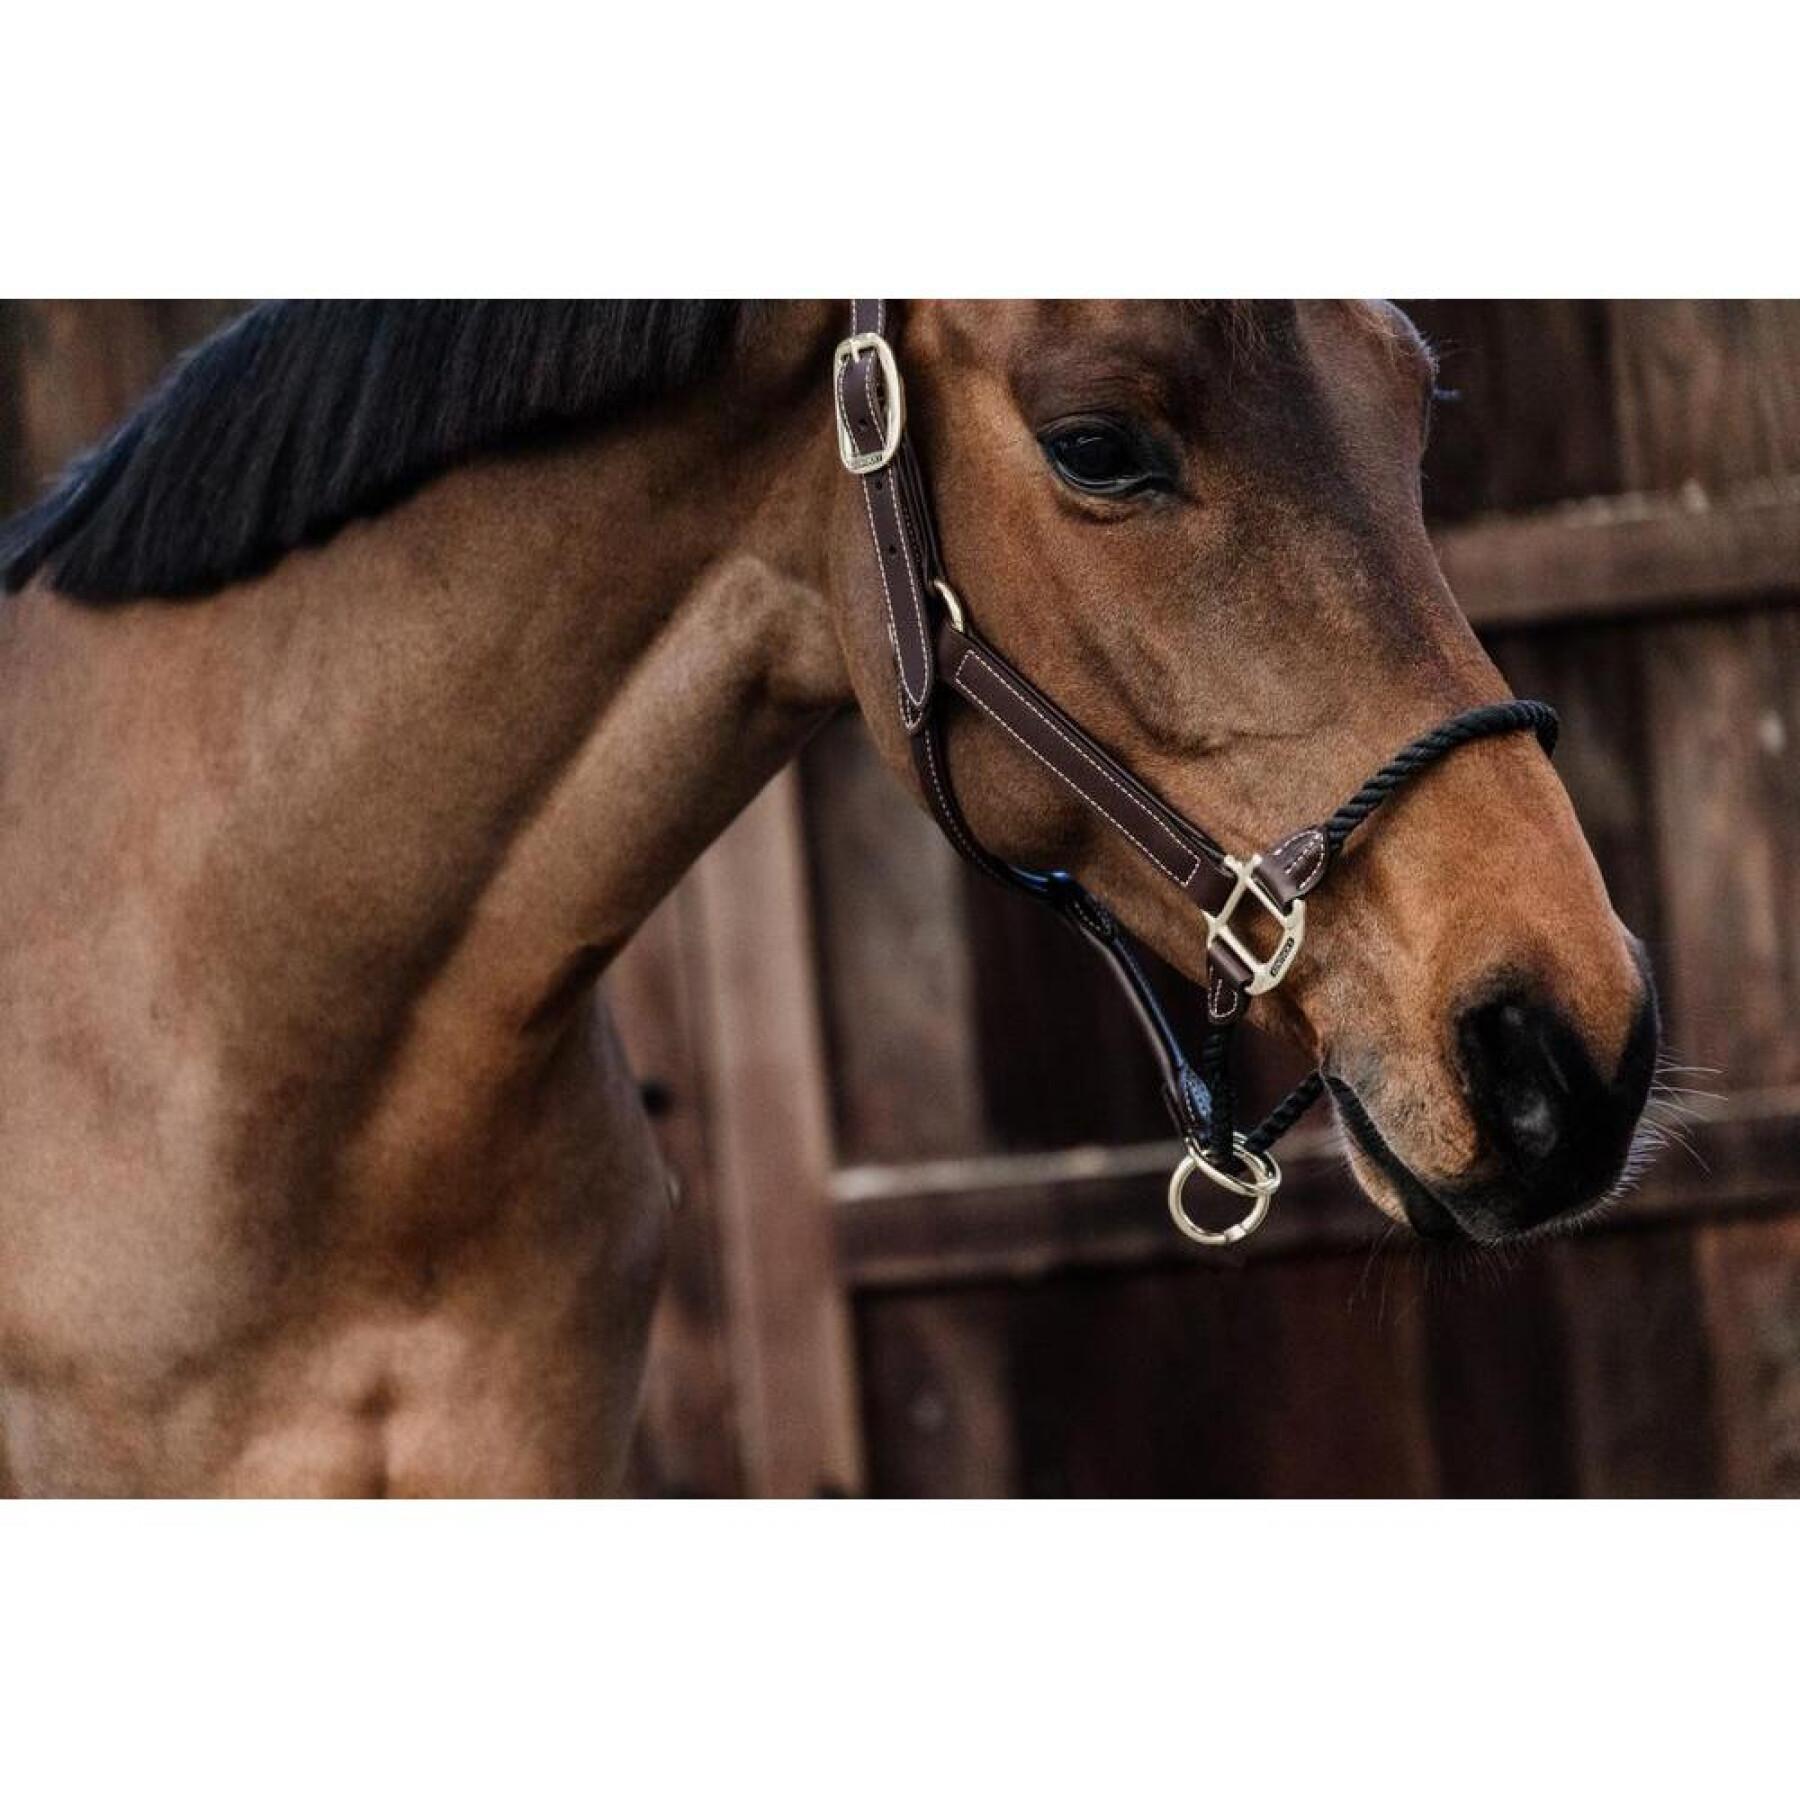 Leather halter for horses Kentucky reins